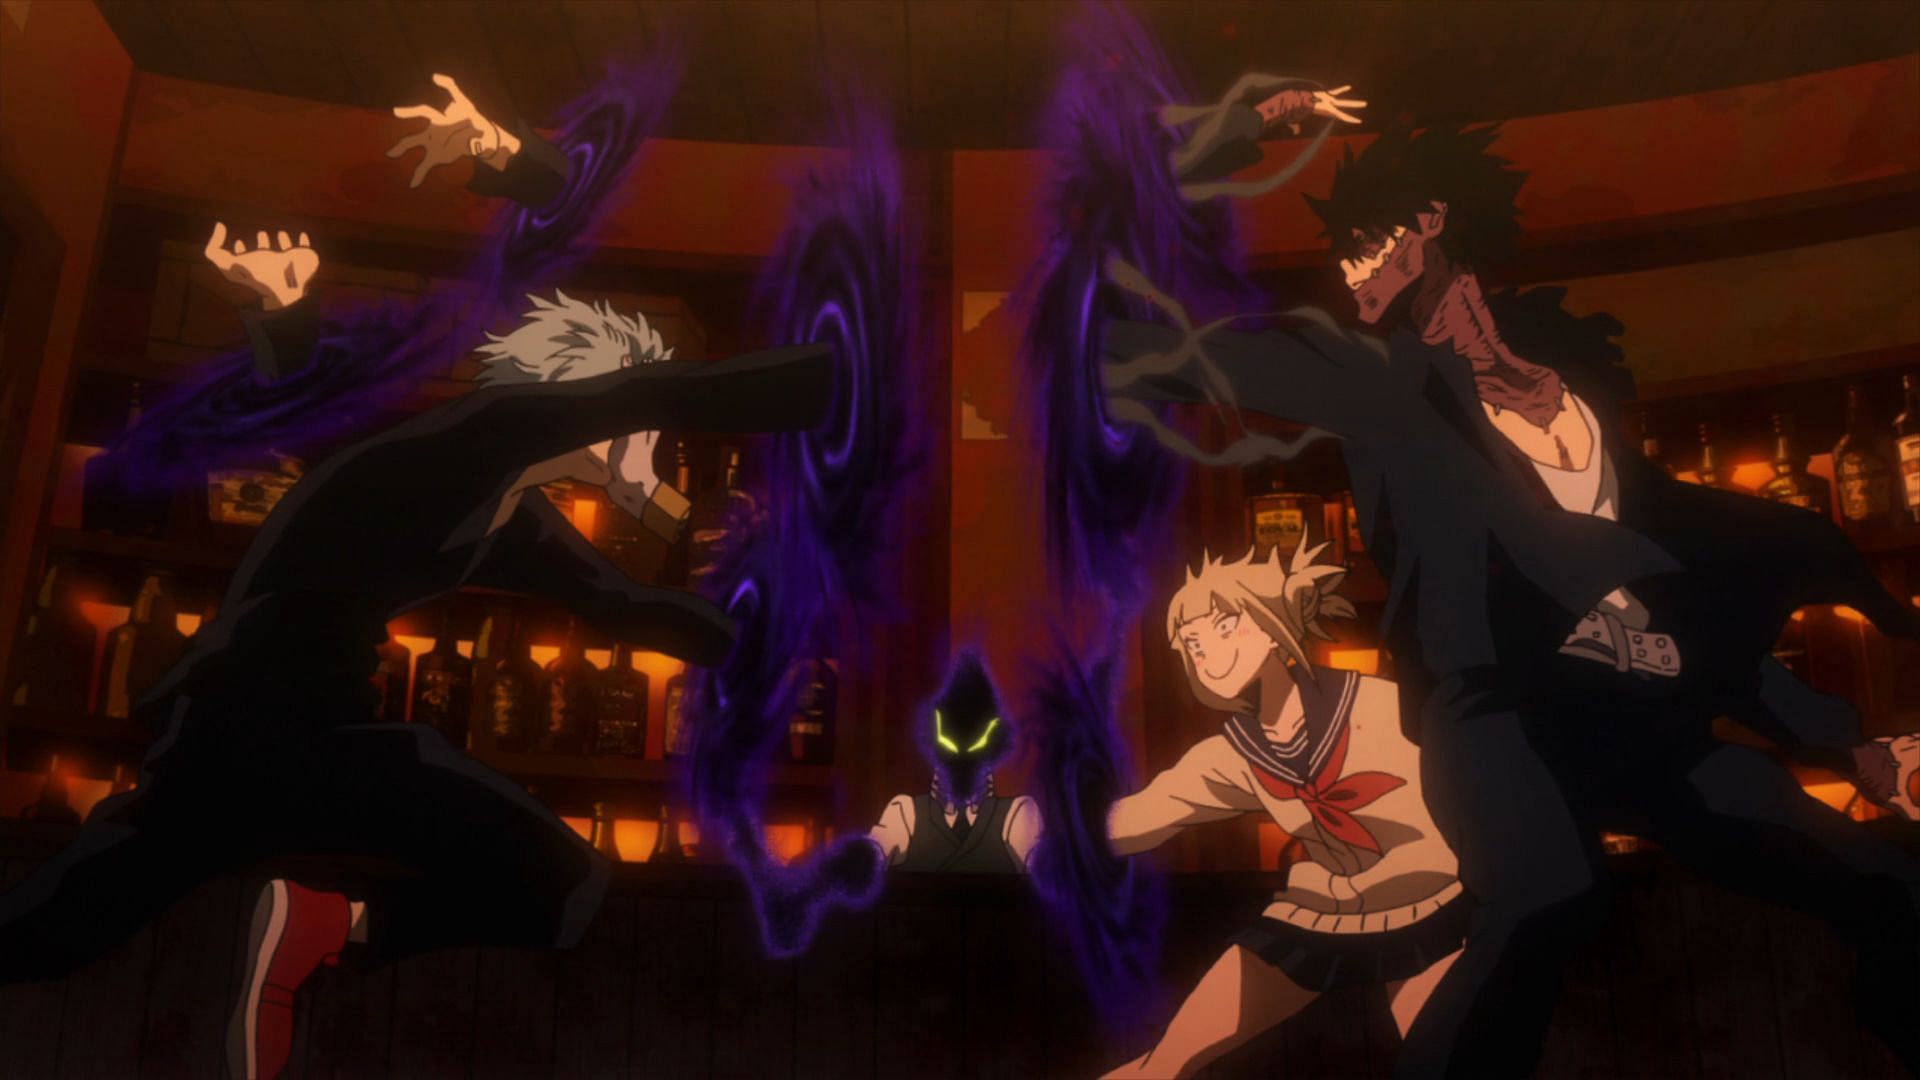 Kurogiri uses his Warp Gate to avoid infighting in the League of Villains. (Image via Studio Bones)